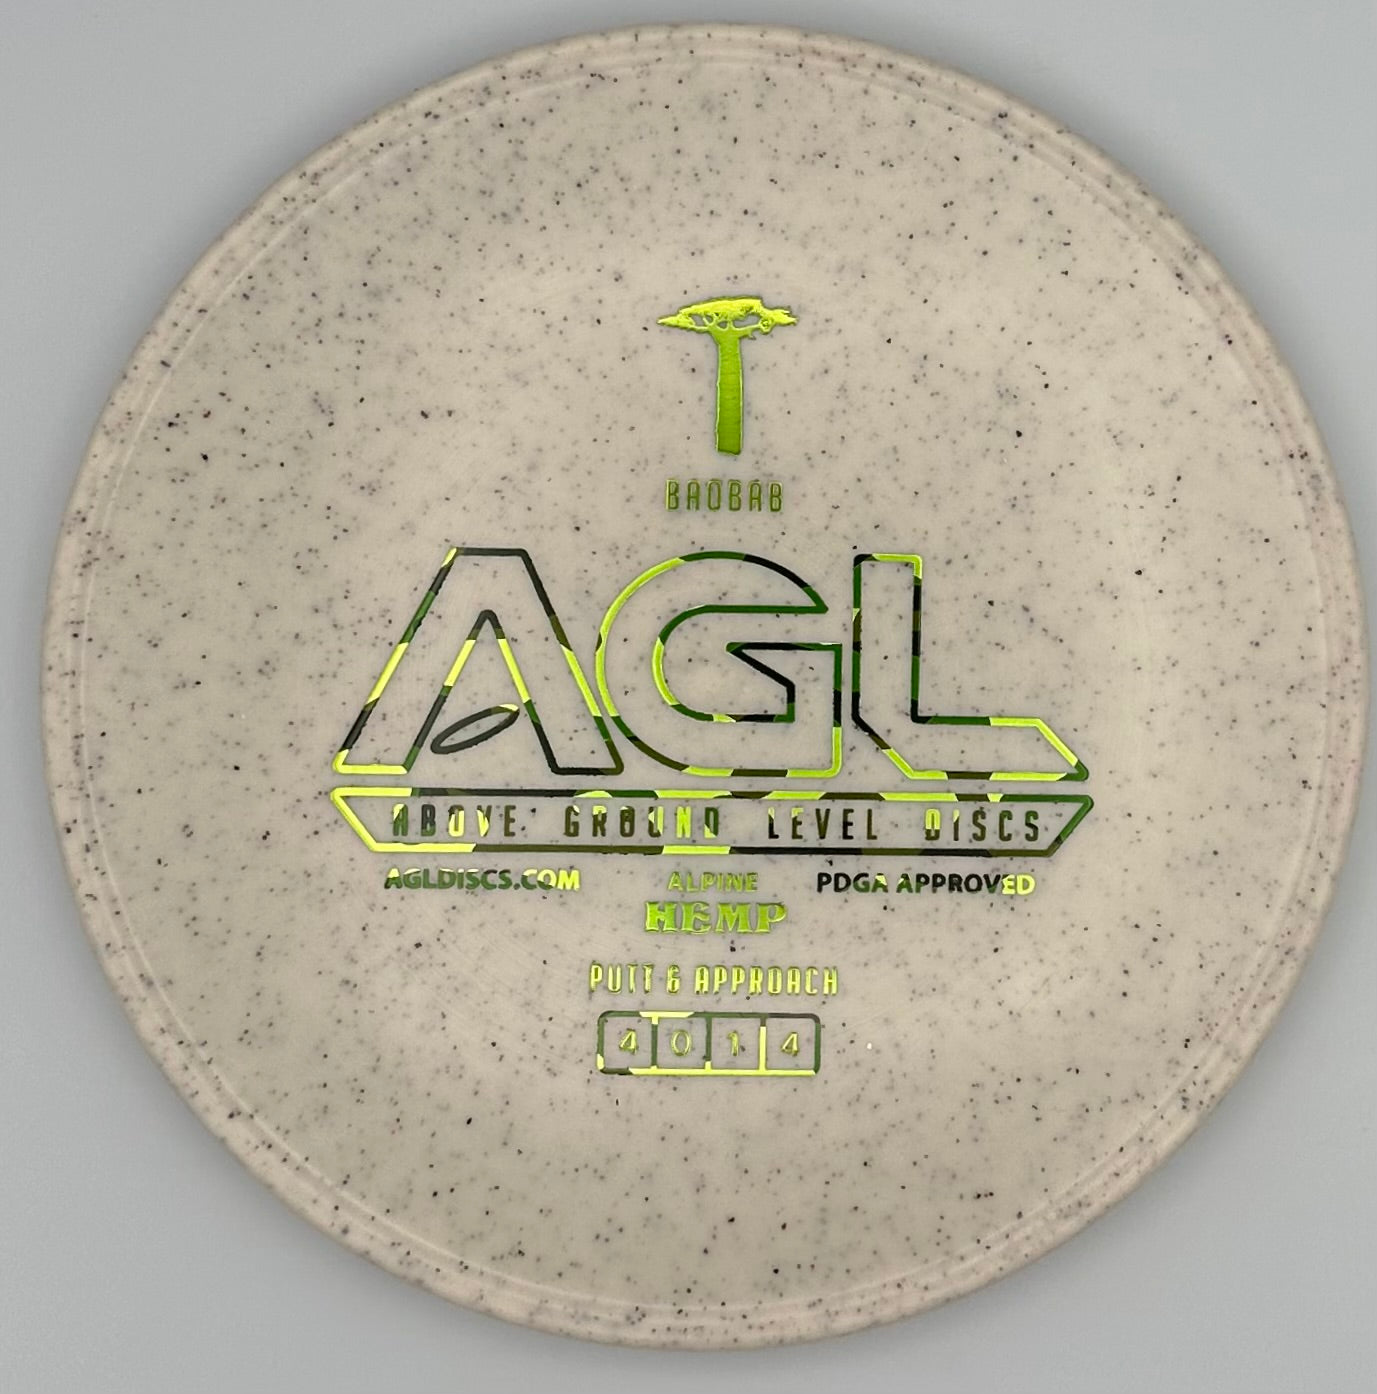 AGL Discs - Cookies and Cream Alpine Hemp Baobab (AGL Bar Stamp)